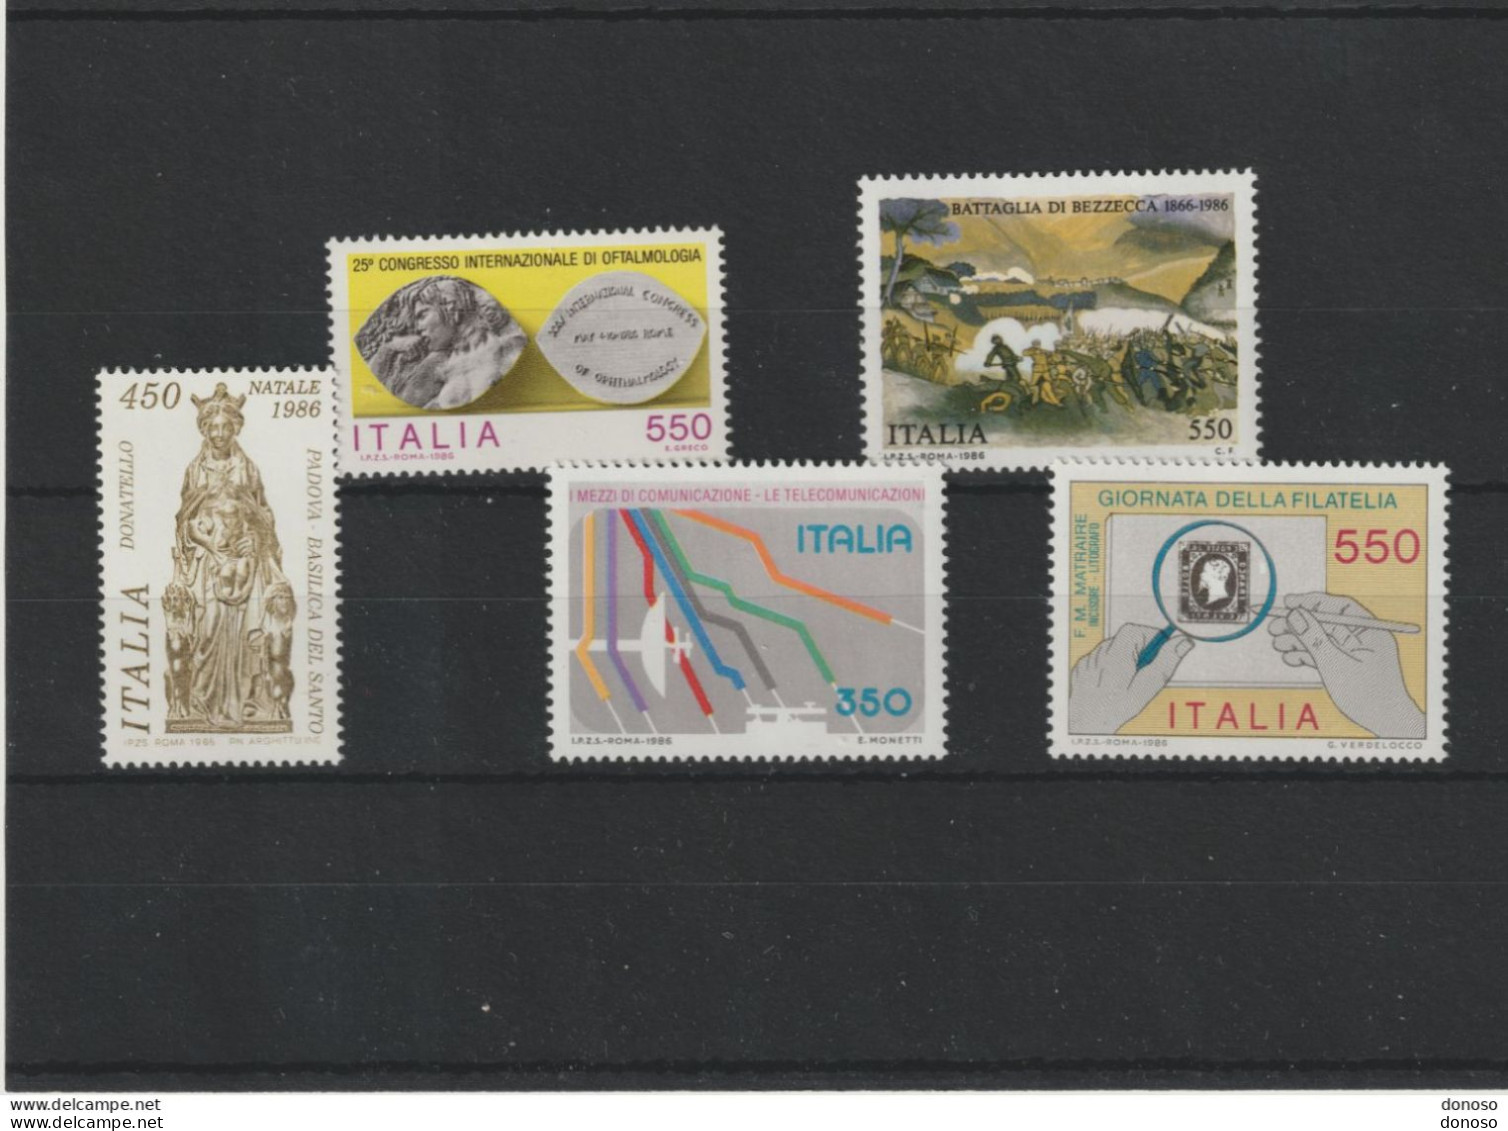 ITALIE 1986 Yvert 1704 + 1708 + 1710 + 1727 + 1732 NEUF** MNH Cote : 8,25 Euros - 1981-90: Mint/hinged